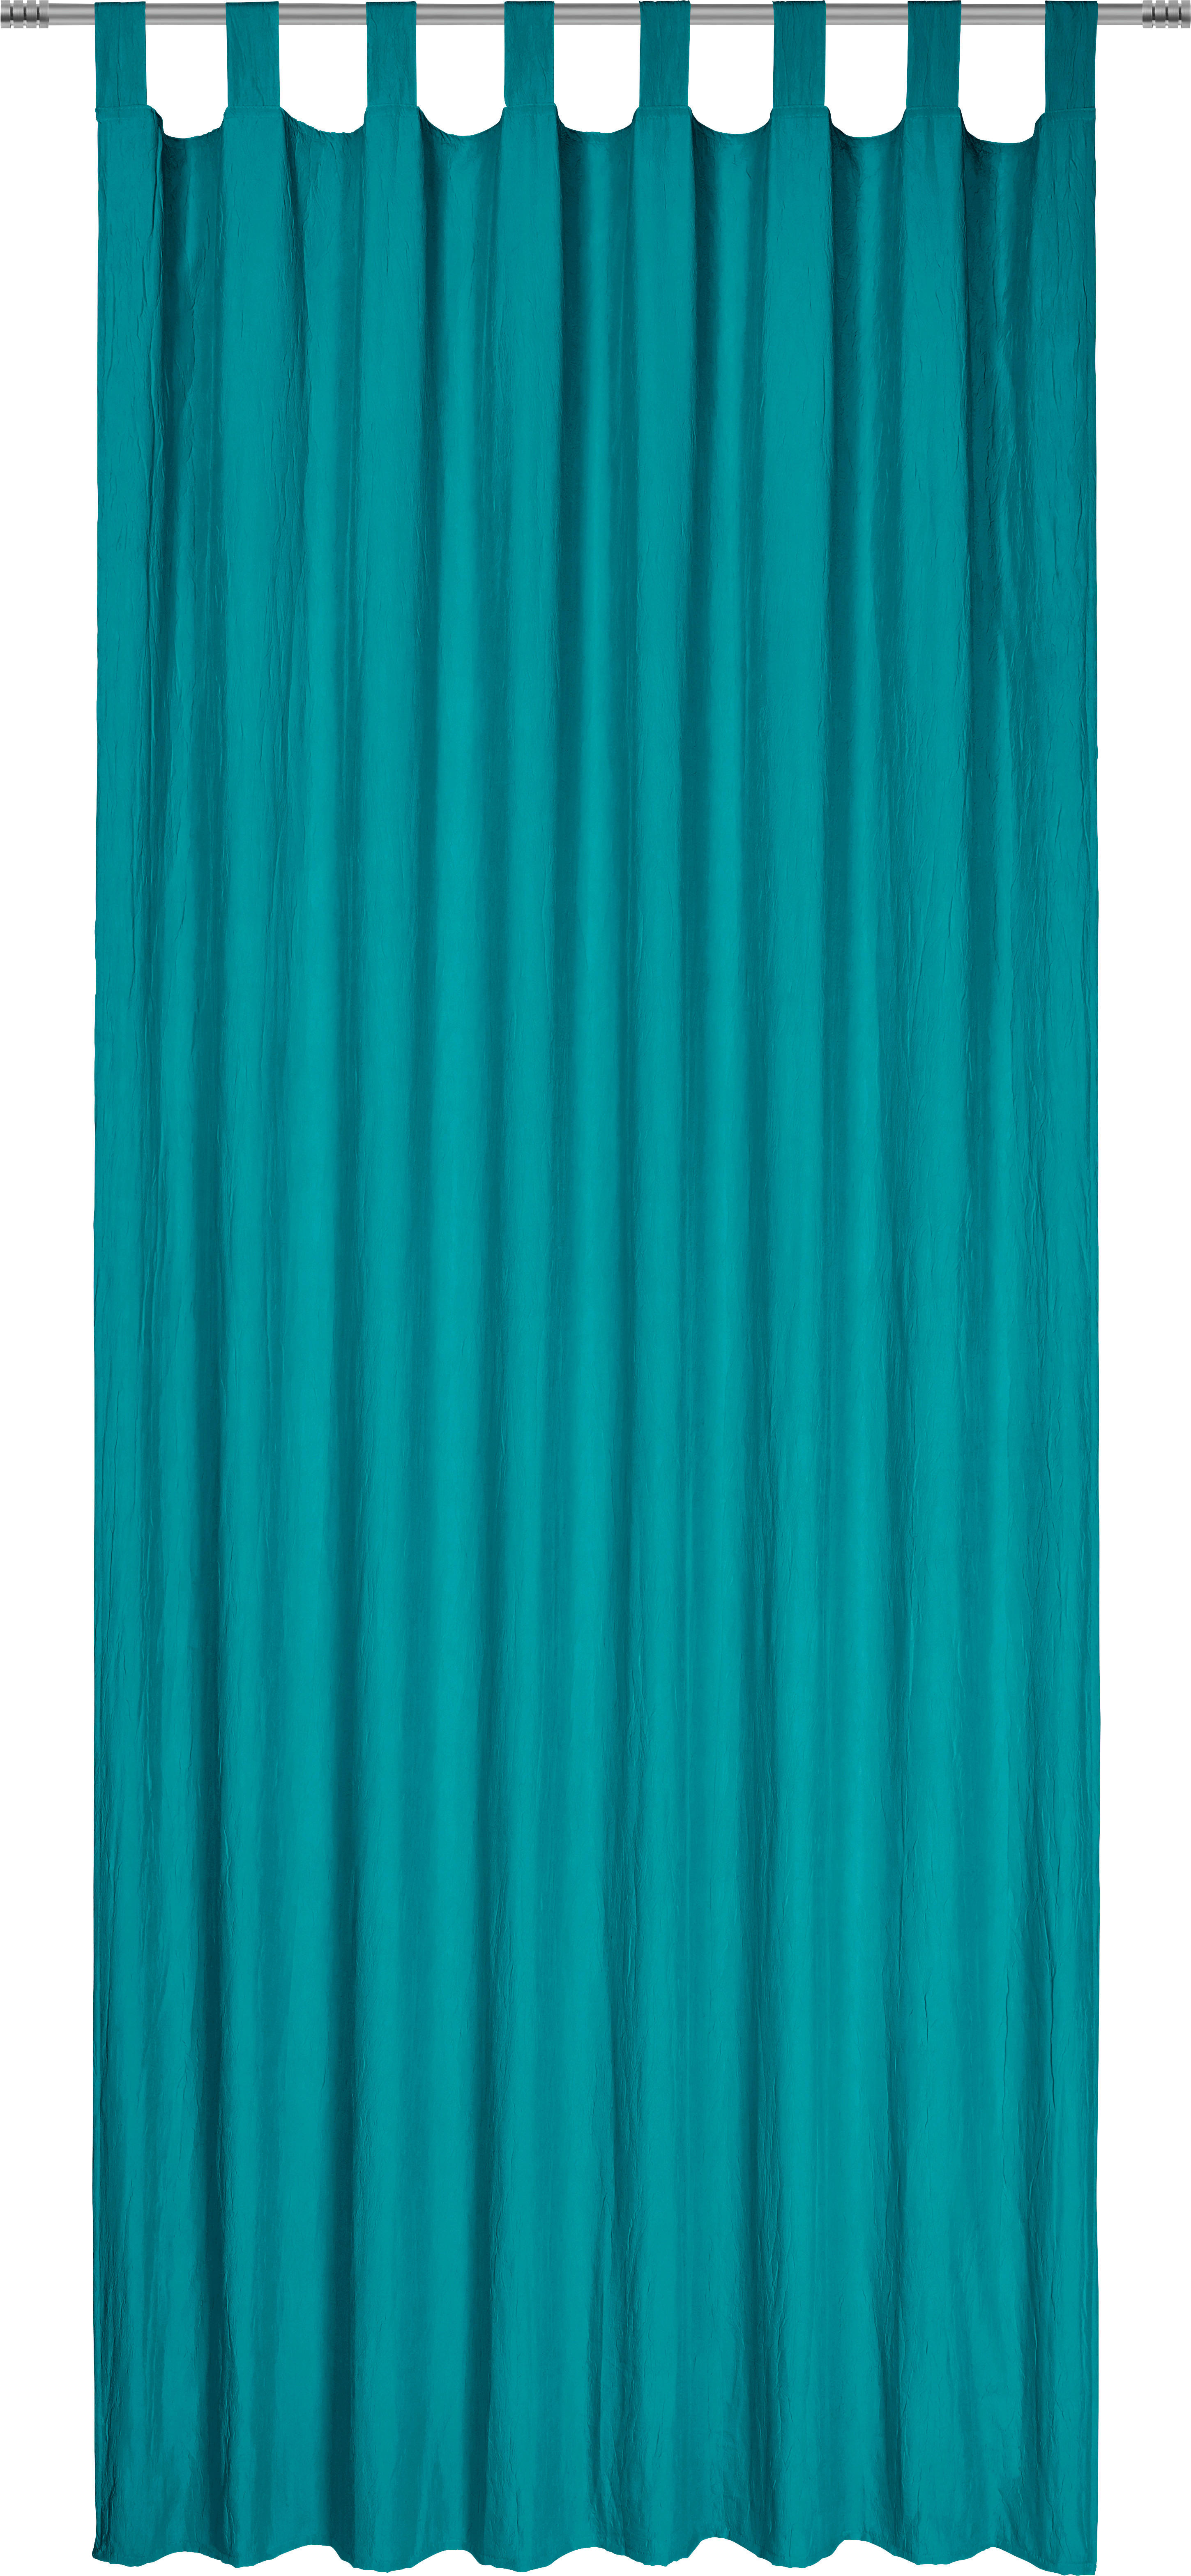 ZAVESA Z ZANKAMI POLO, TURKIZ  pol prosojno  135/245 cm   - turkizna, Konvencionalno, tekstil (135/245cm) - Boxxx